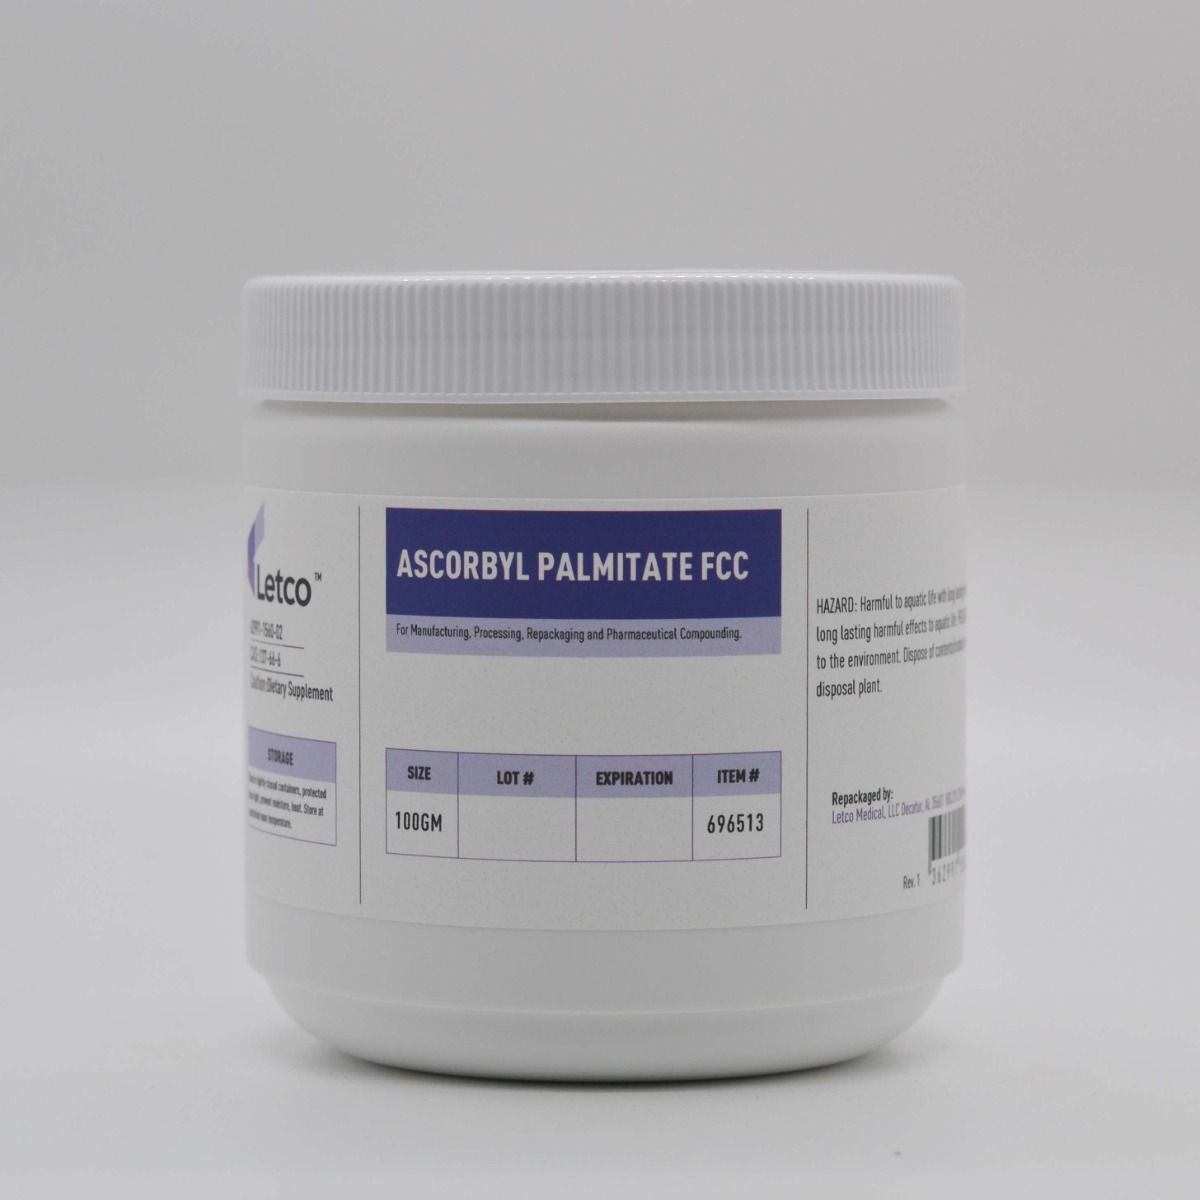 Ascorbyl Palmitate FCC (*temperature sensitive*)